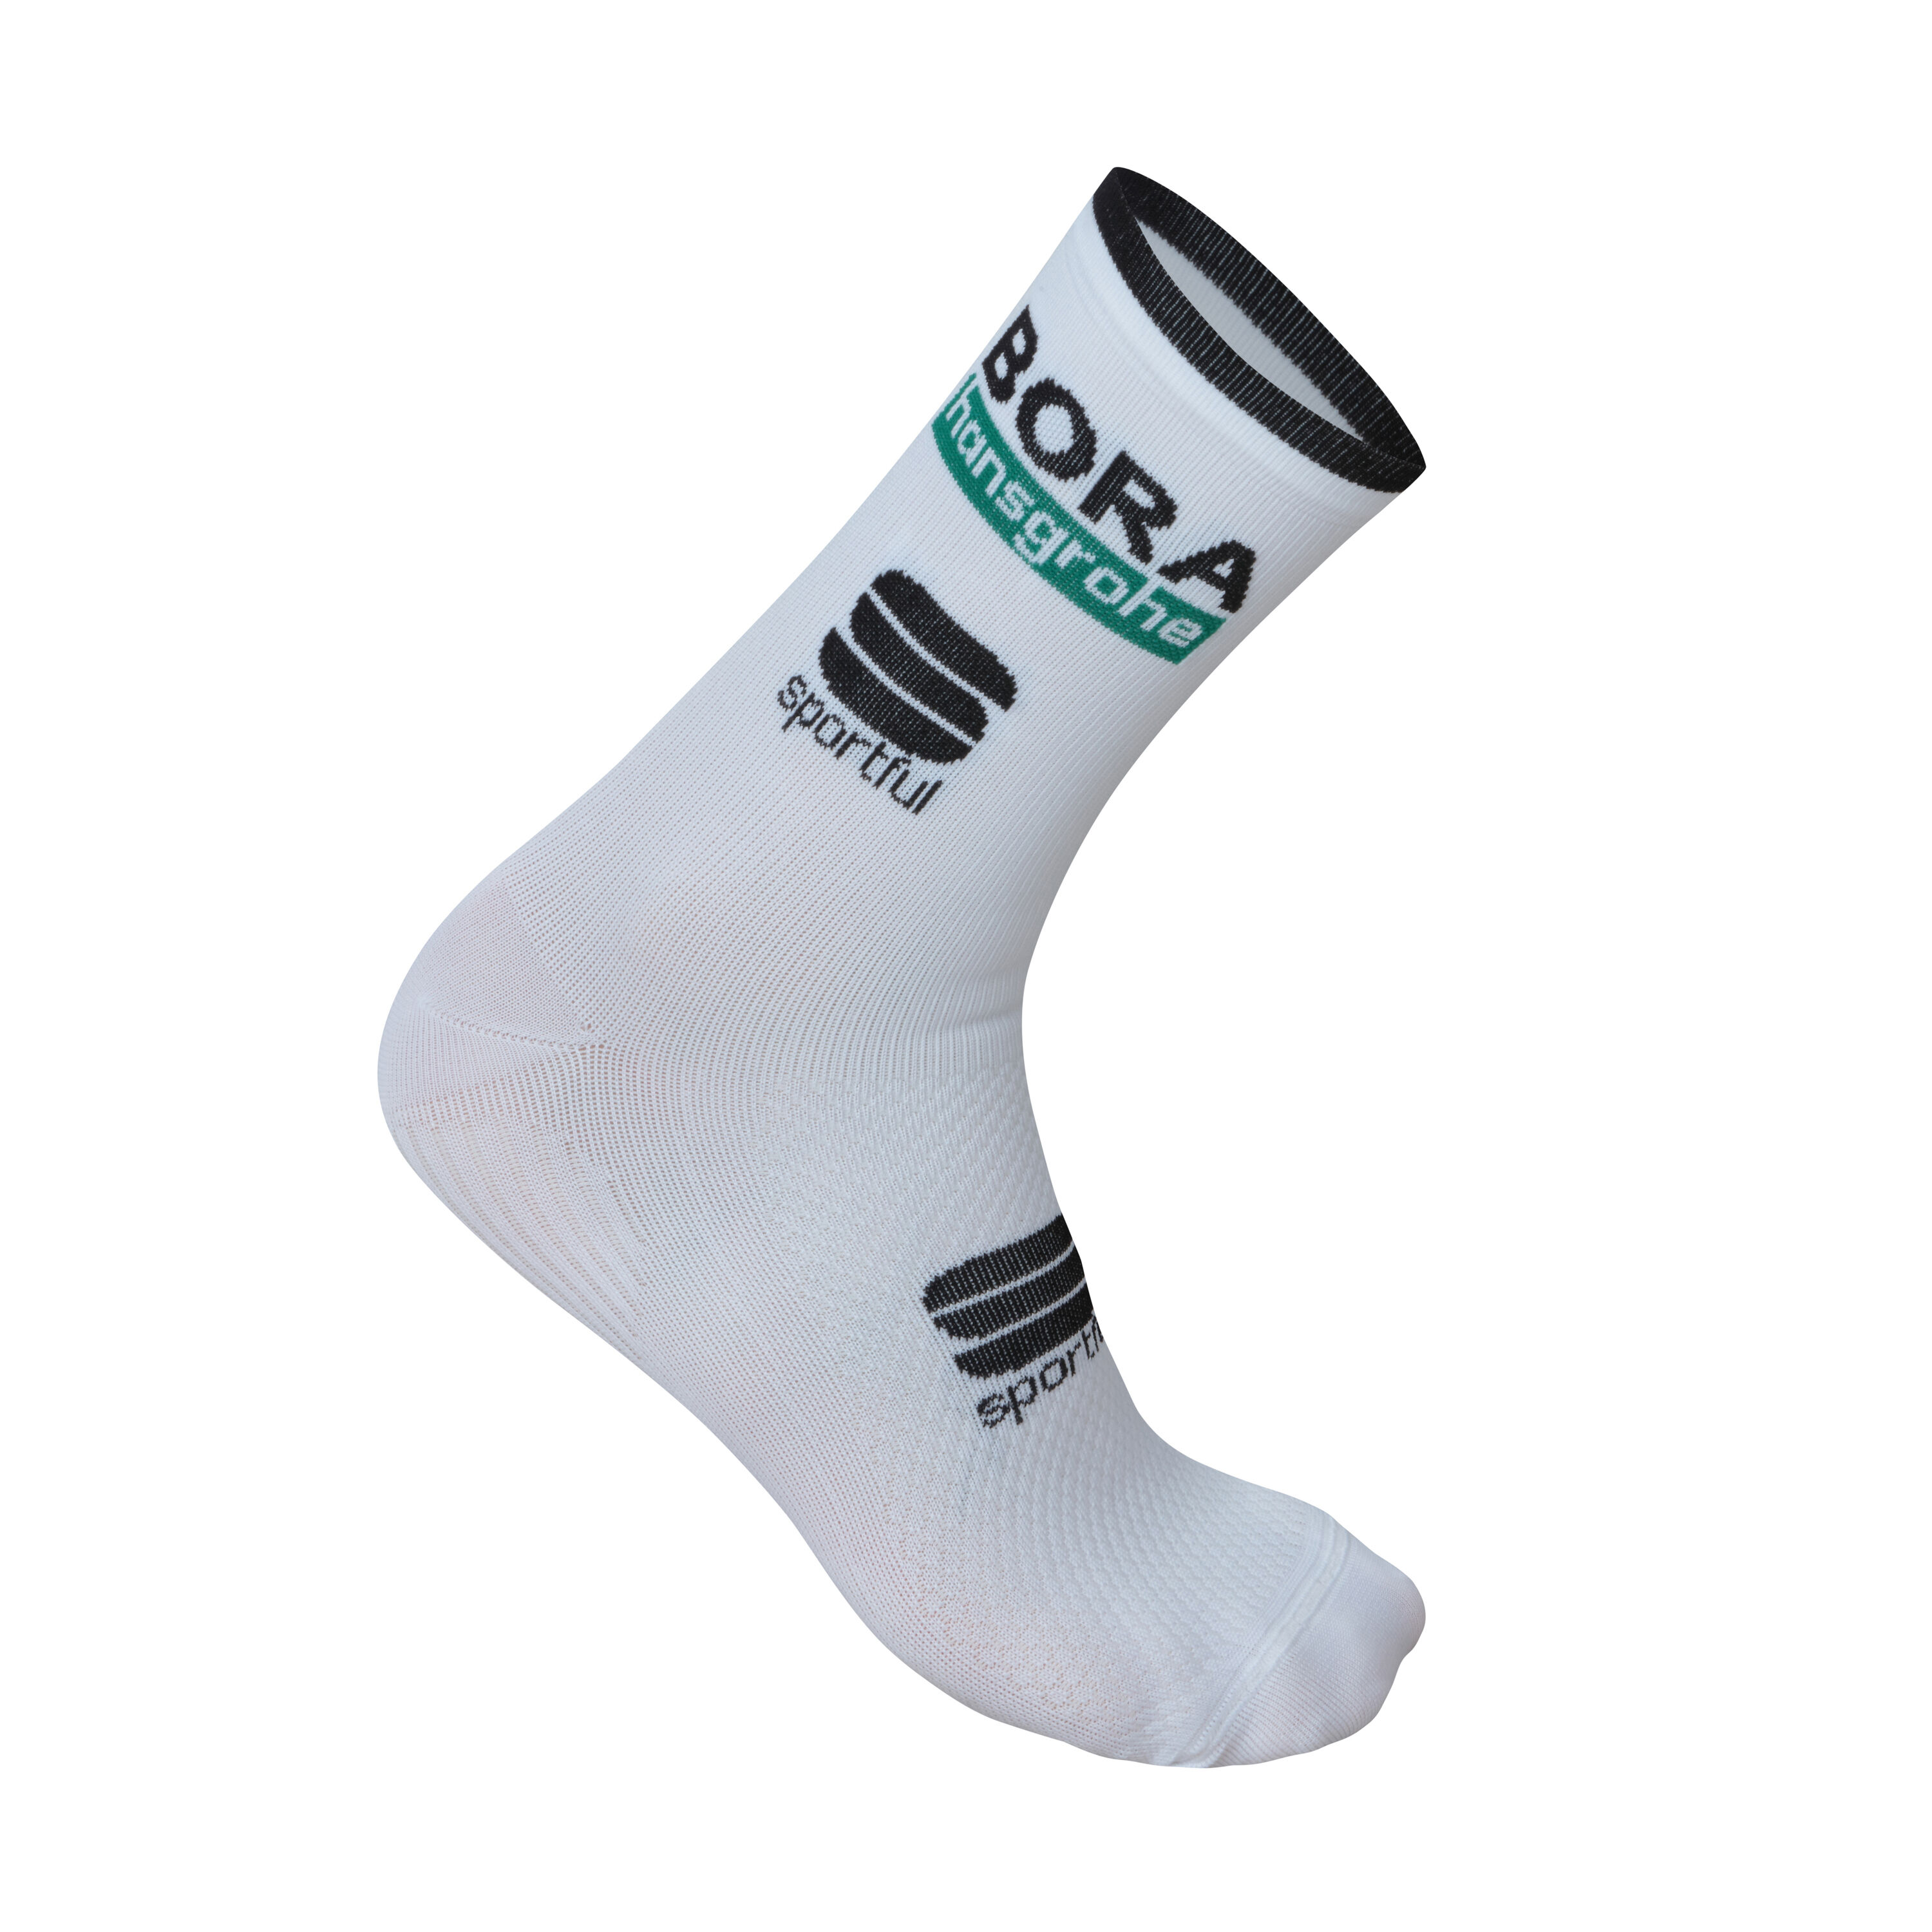 Sportful Bora Hansgrohe Team Race Socks - Calze ciclismo